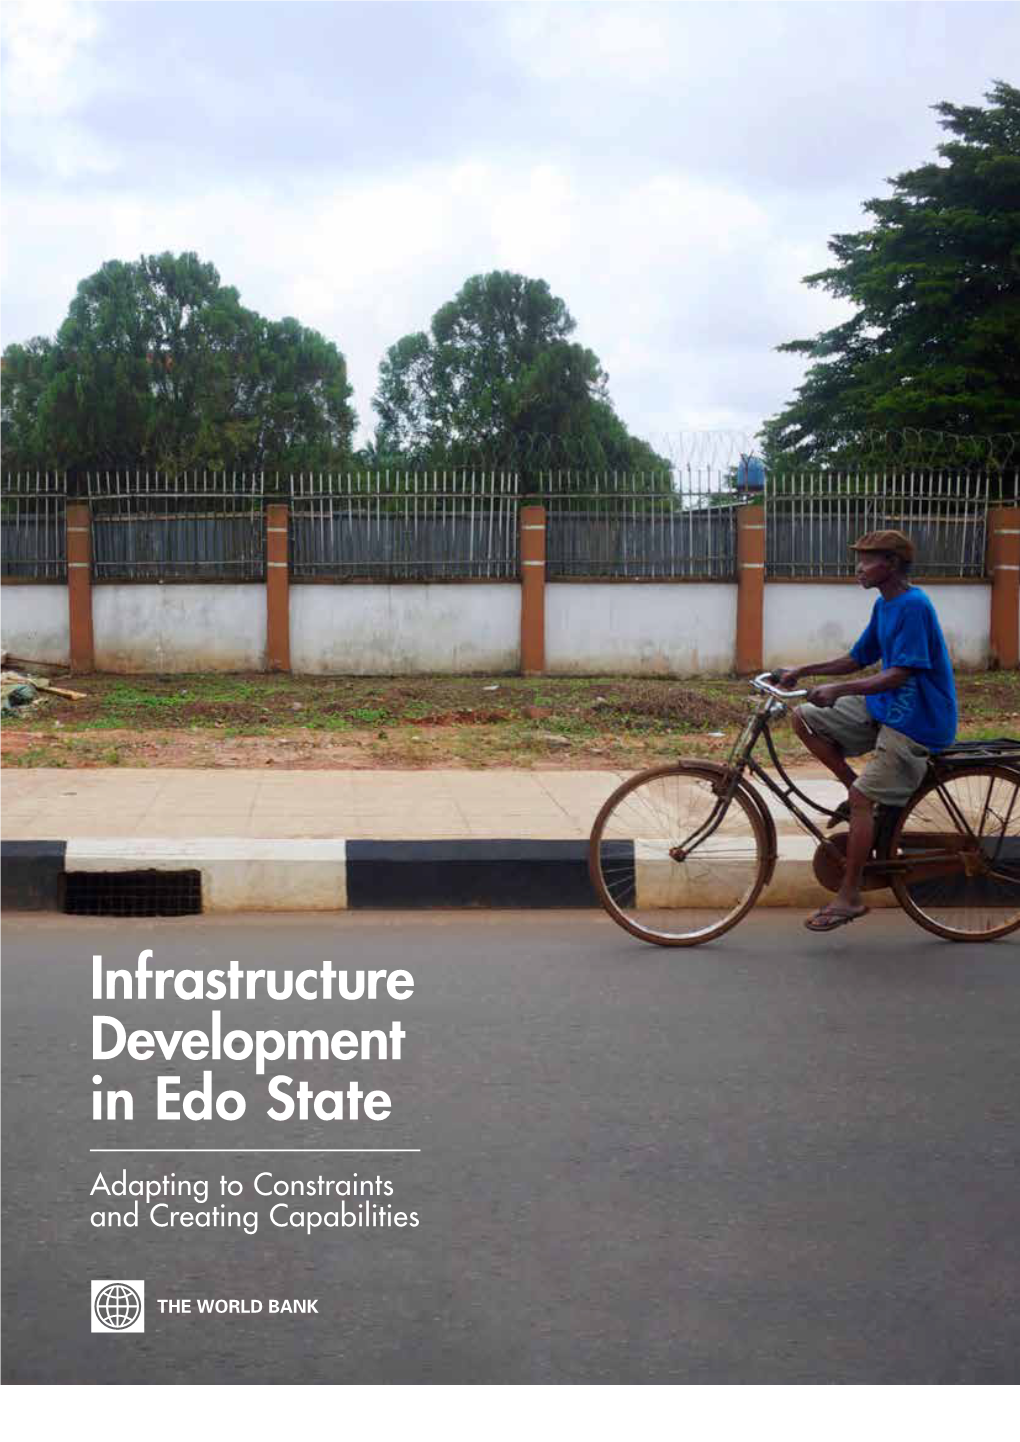 Infrastructure Development in Edo State (2MB)